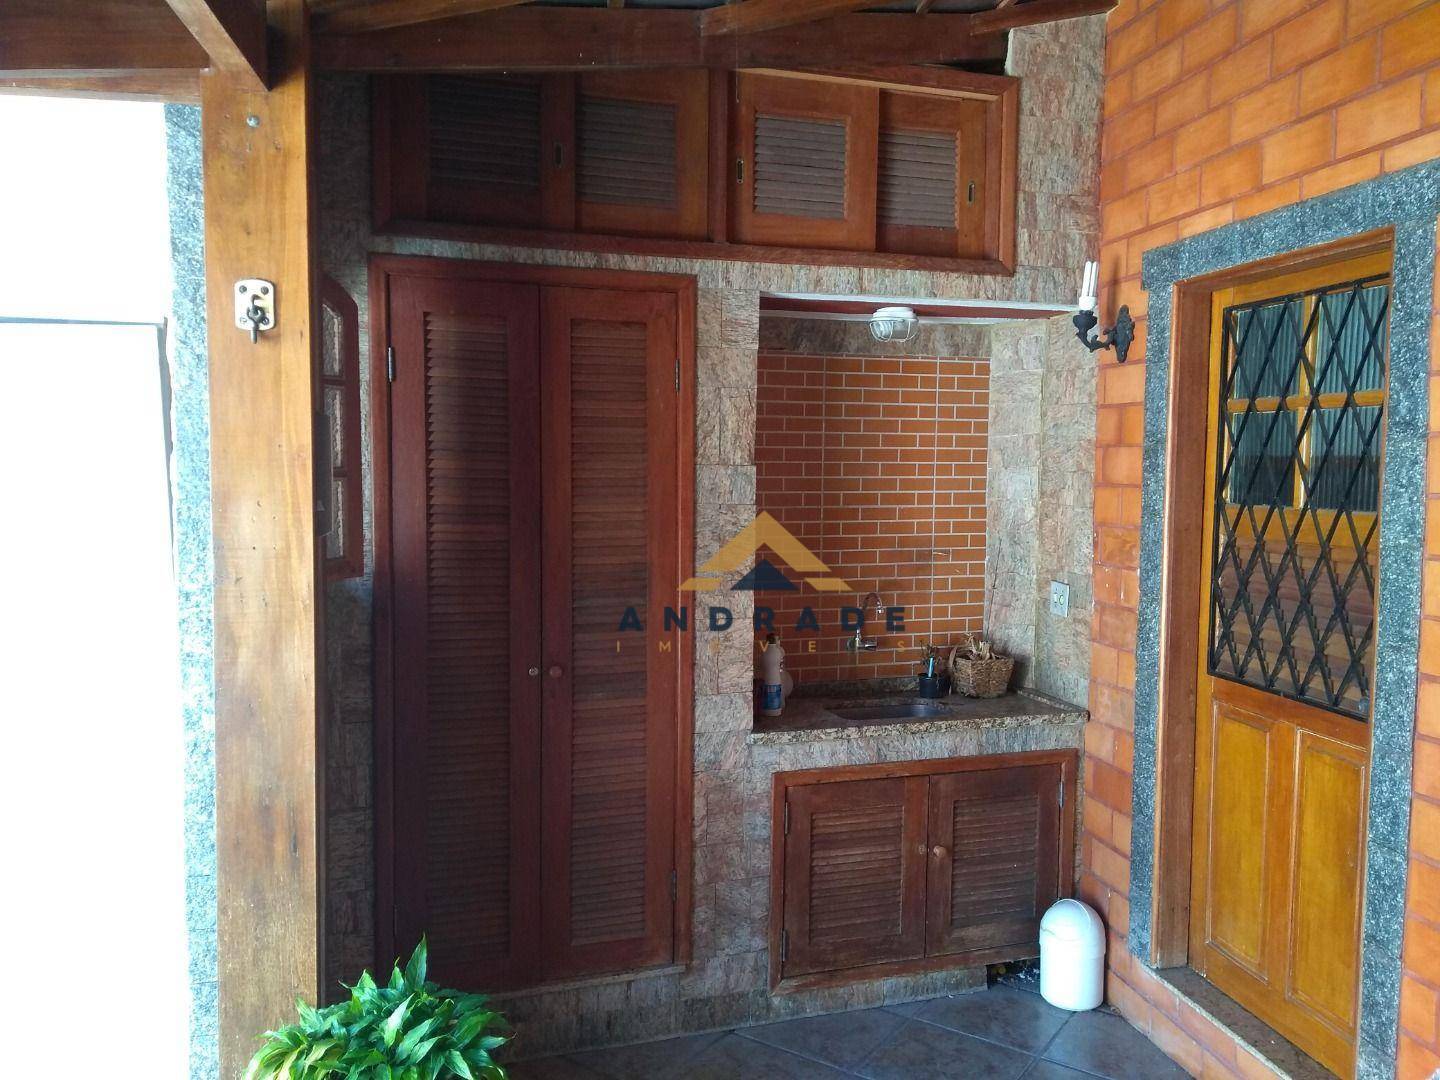 Casa à venda em Tijuca, Teresópolis - RJ - Foto 3